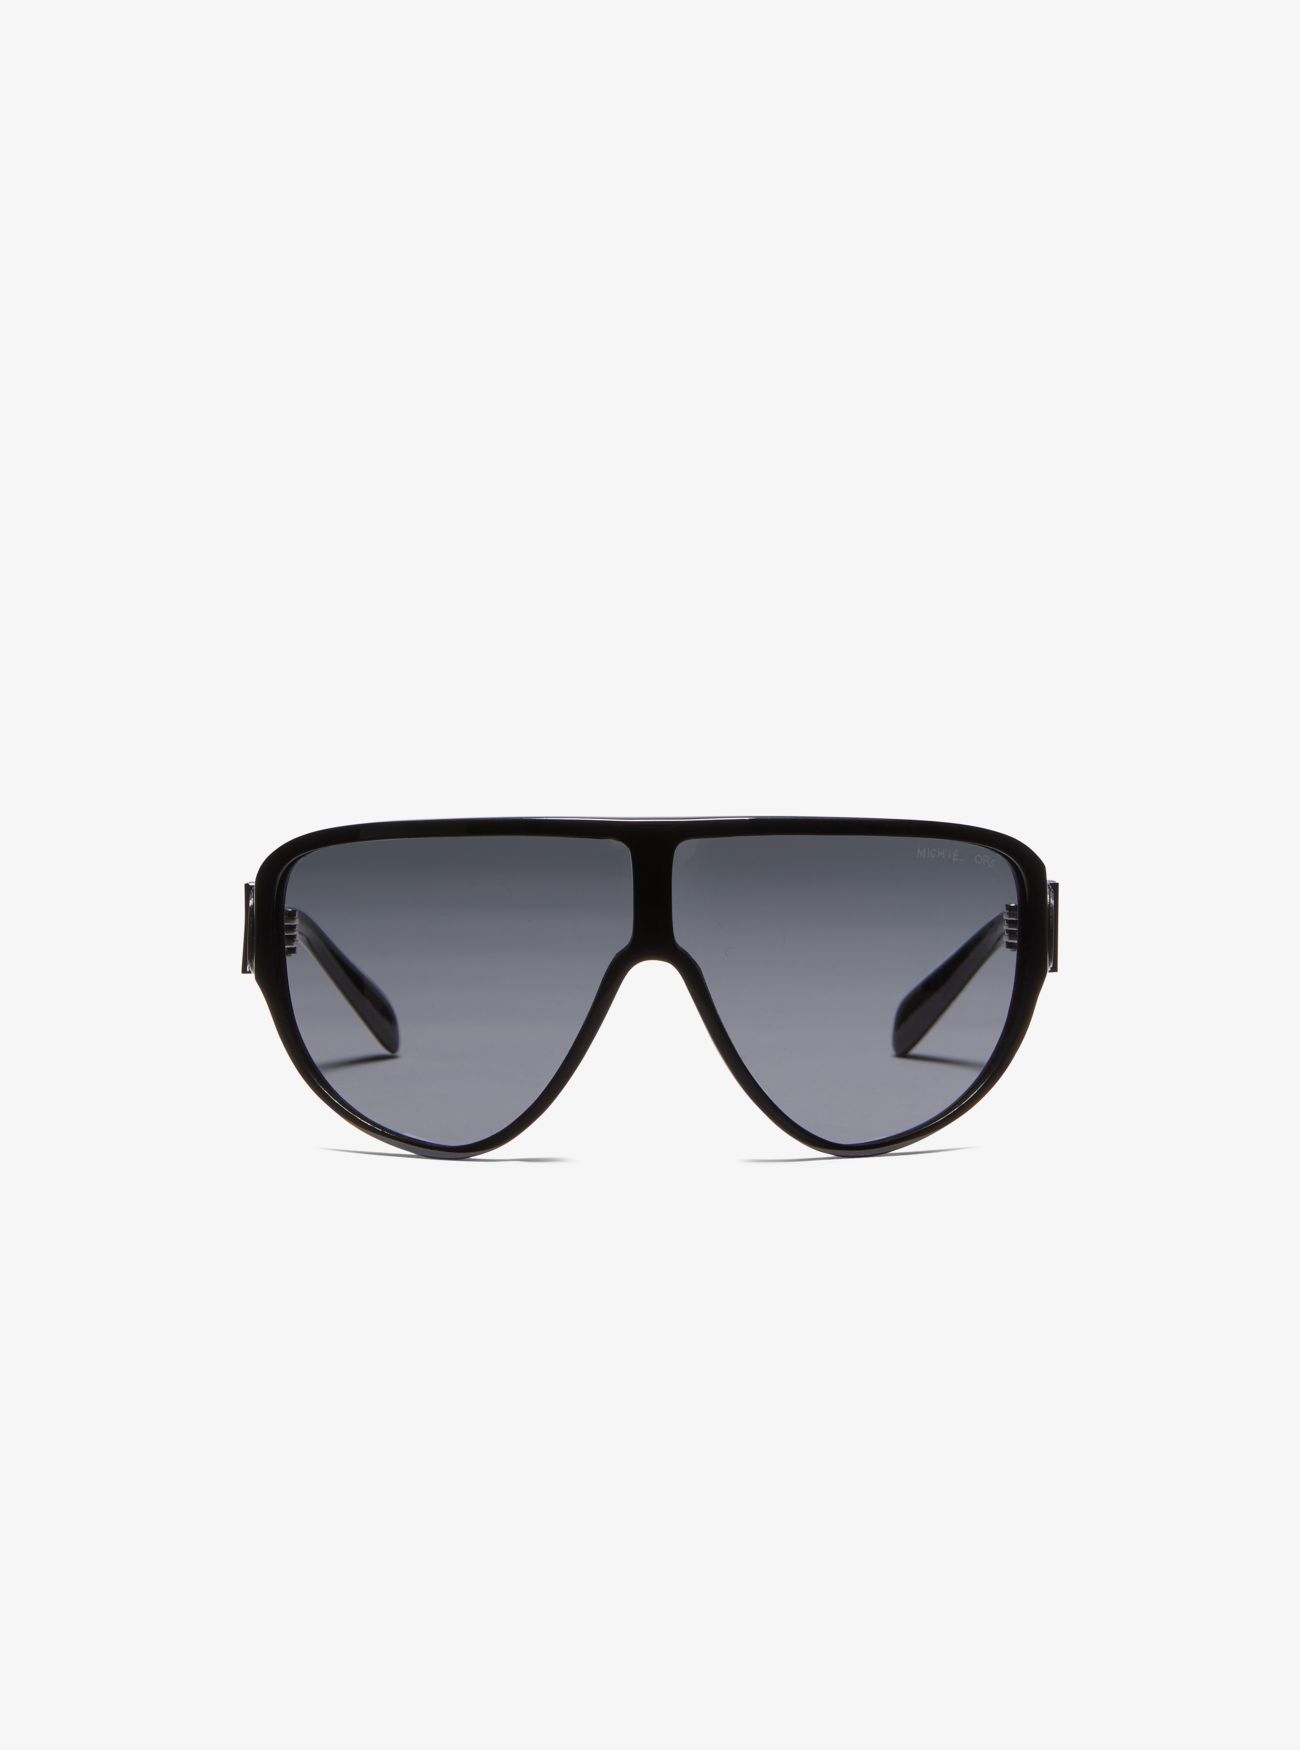 MK Empire Shield Sunglasses - Black - Michael Kors